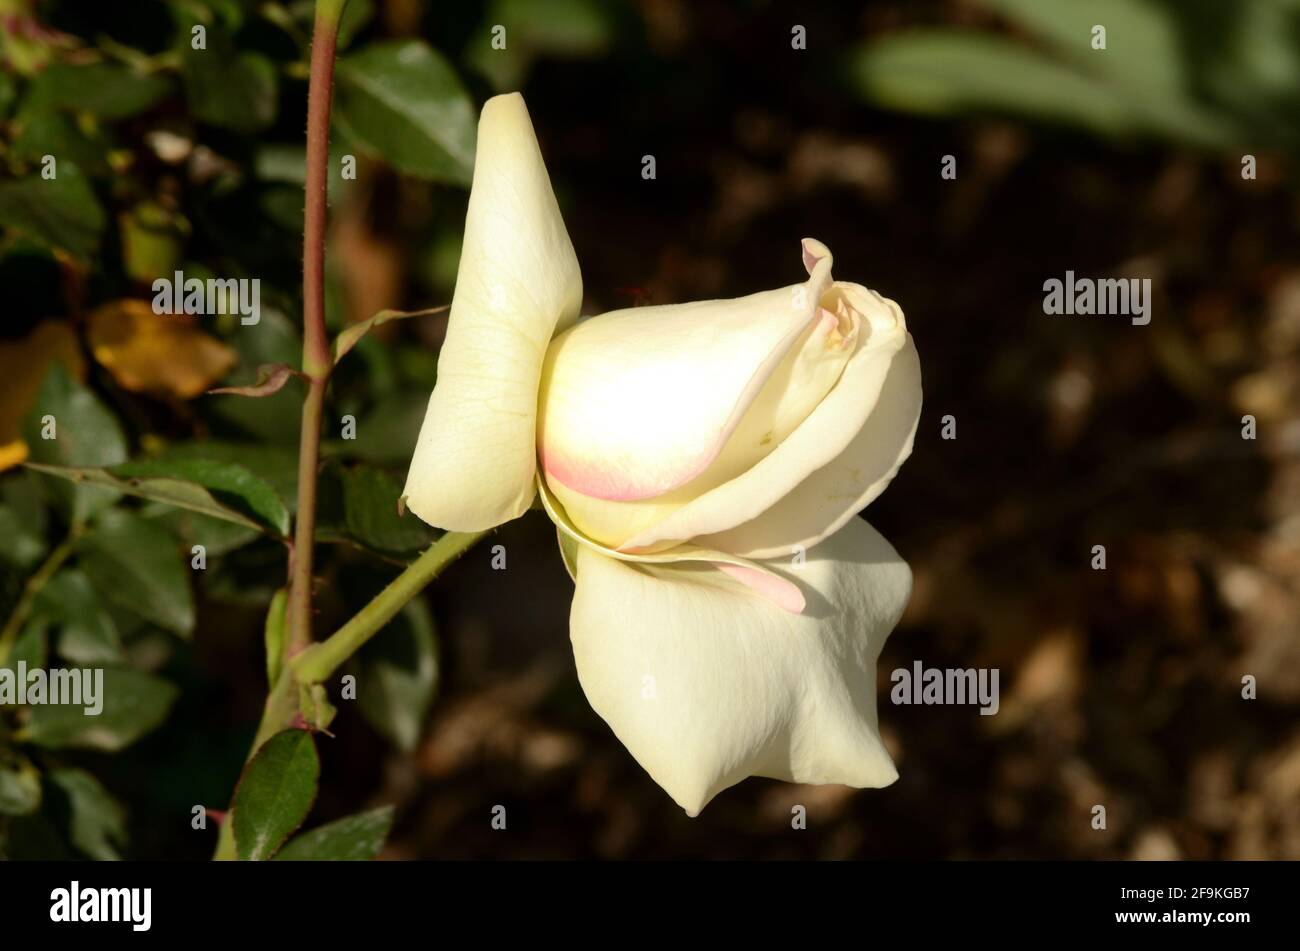 John F Kennedy rose, beautiful white petals of simplistic elegance in garden setting. Stock Photo